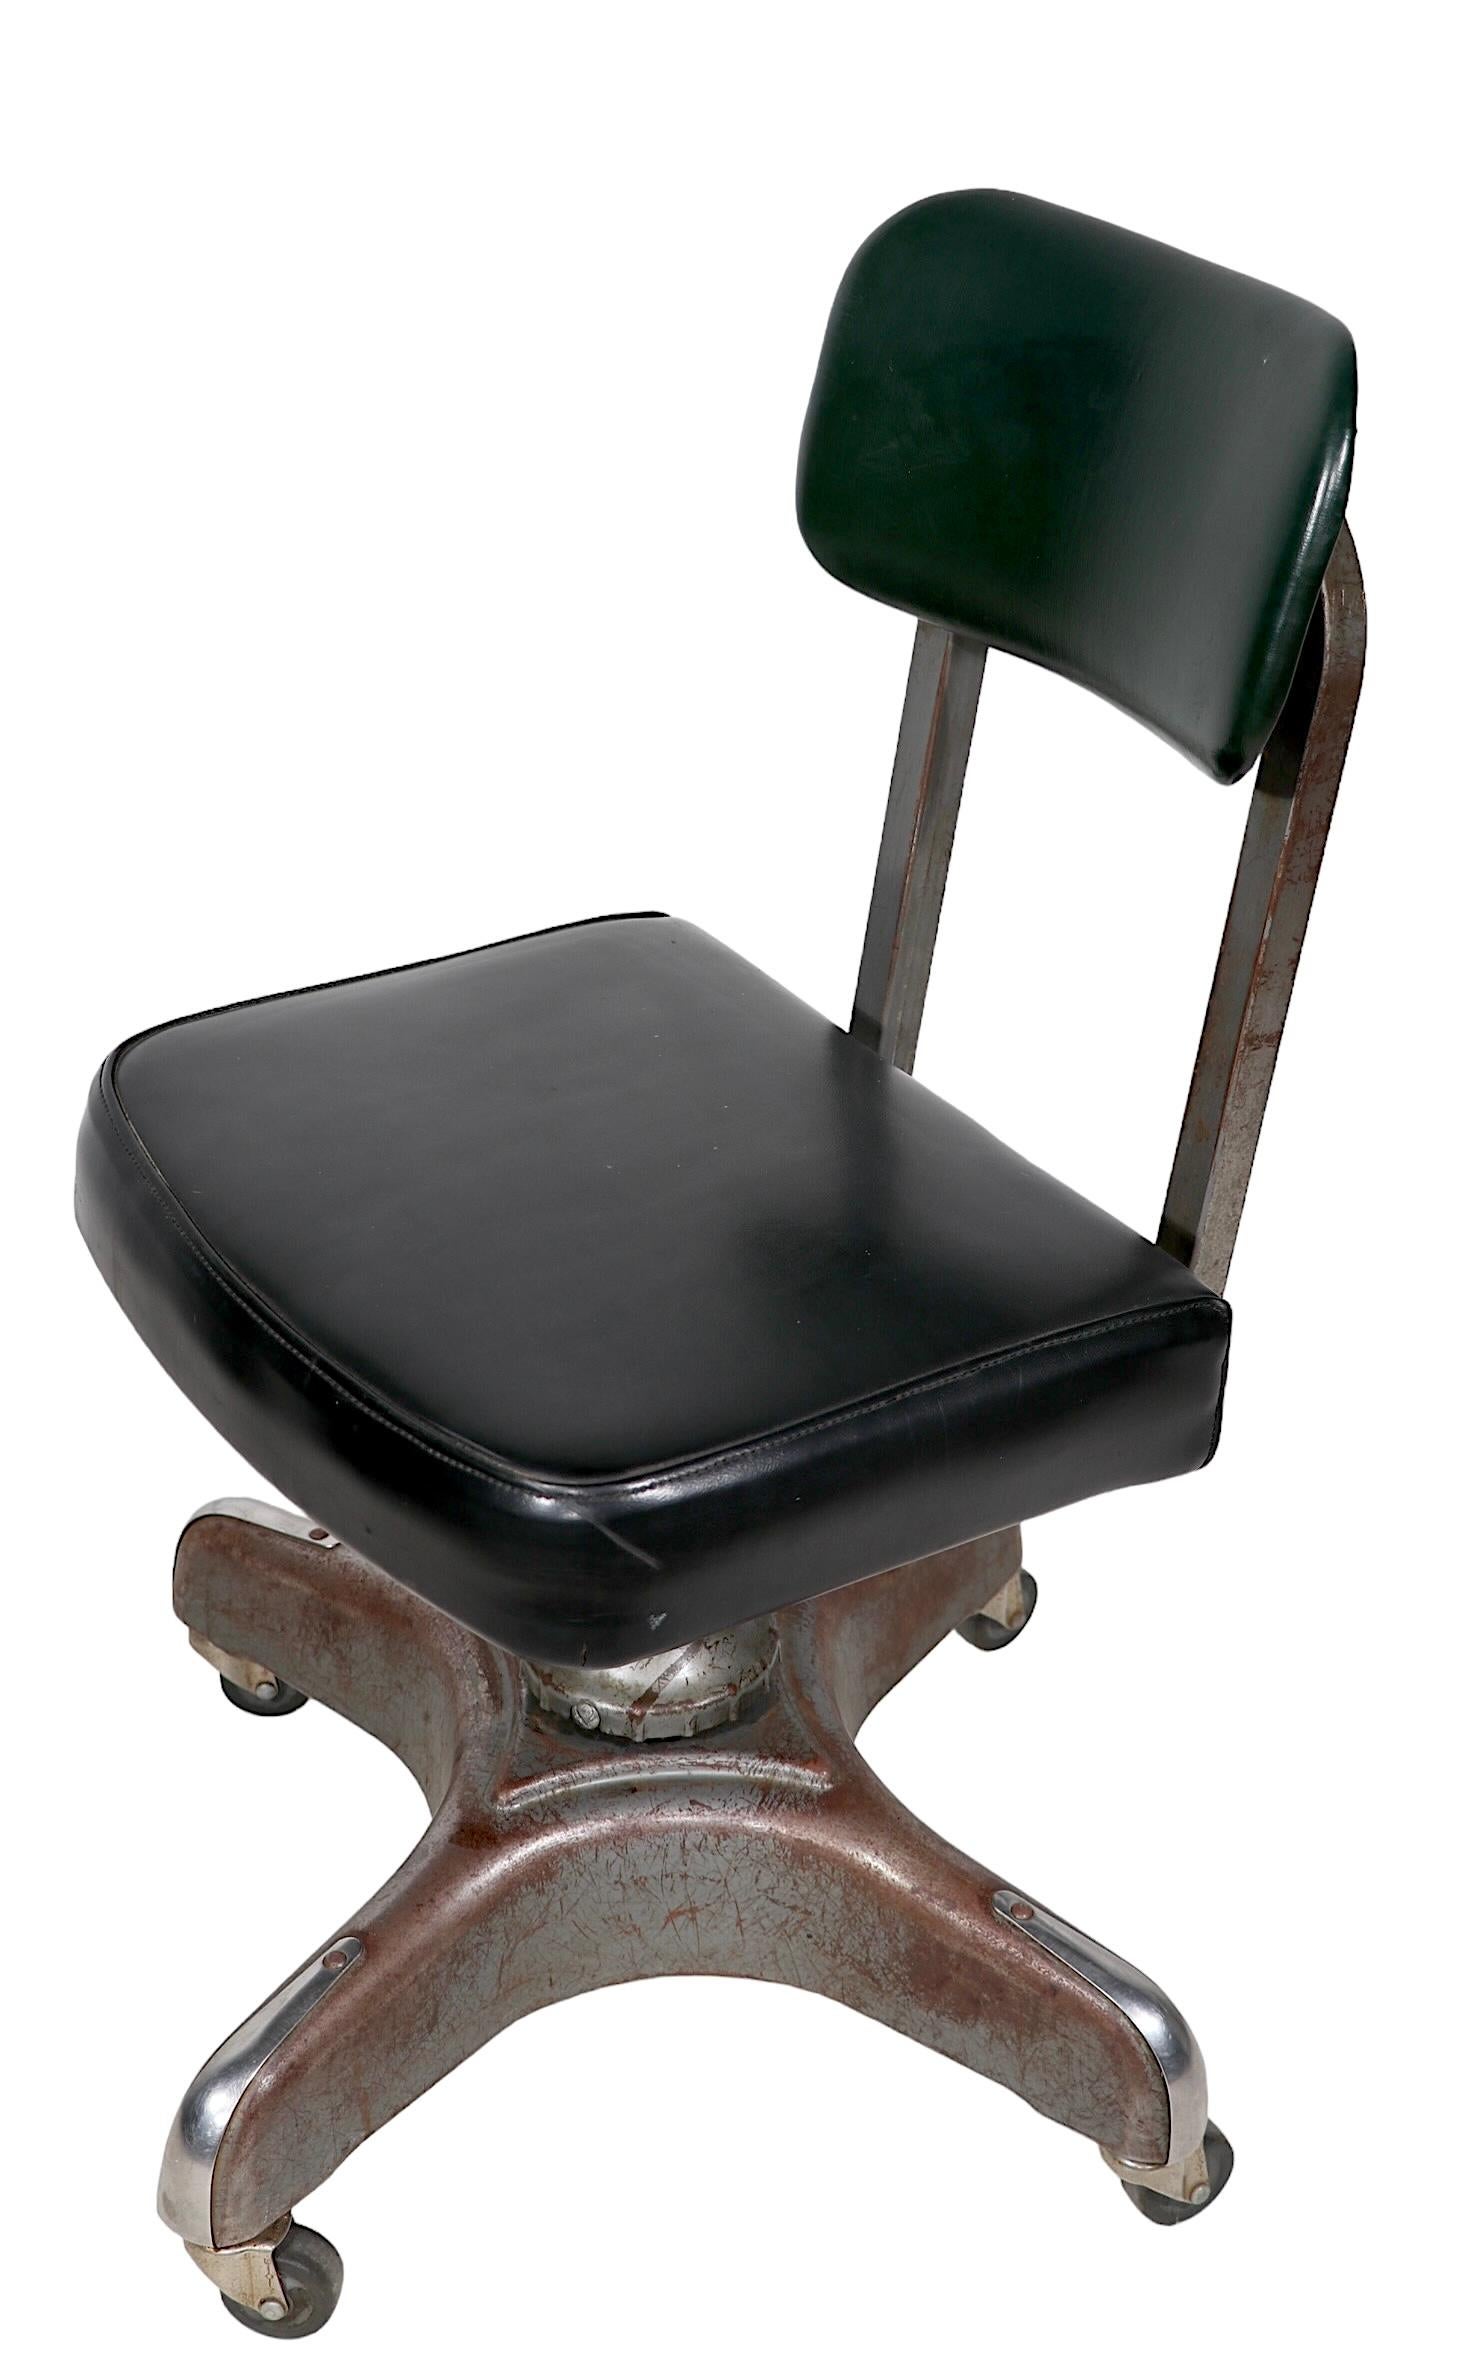 American Art Deco Industrial Swivel Tilt Armless Desk Chair by Harter Corporation 1930/40 For Sale